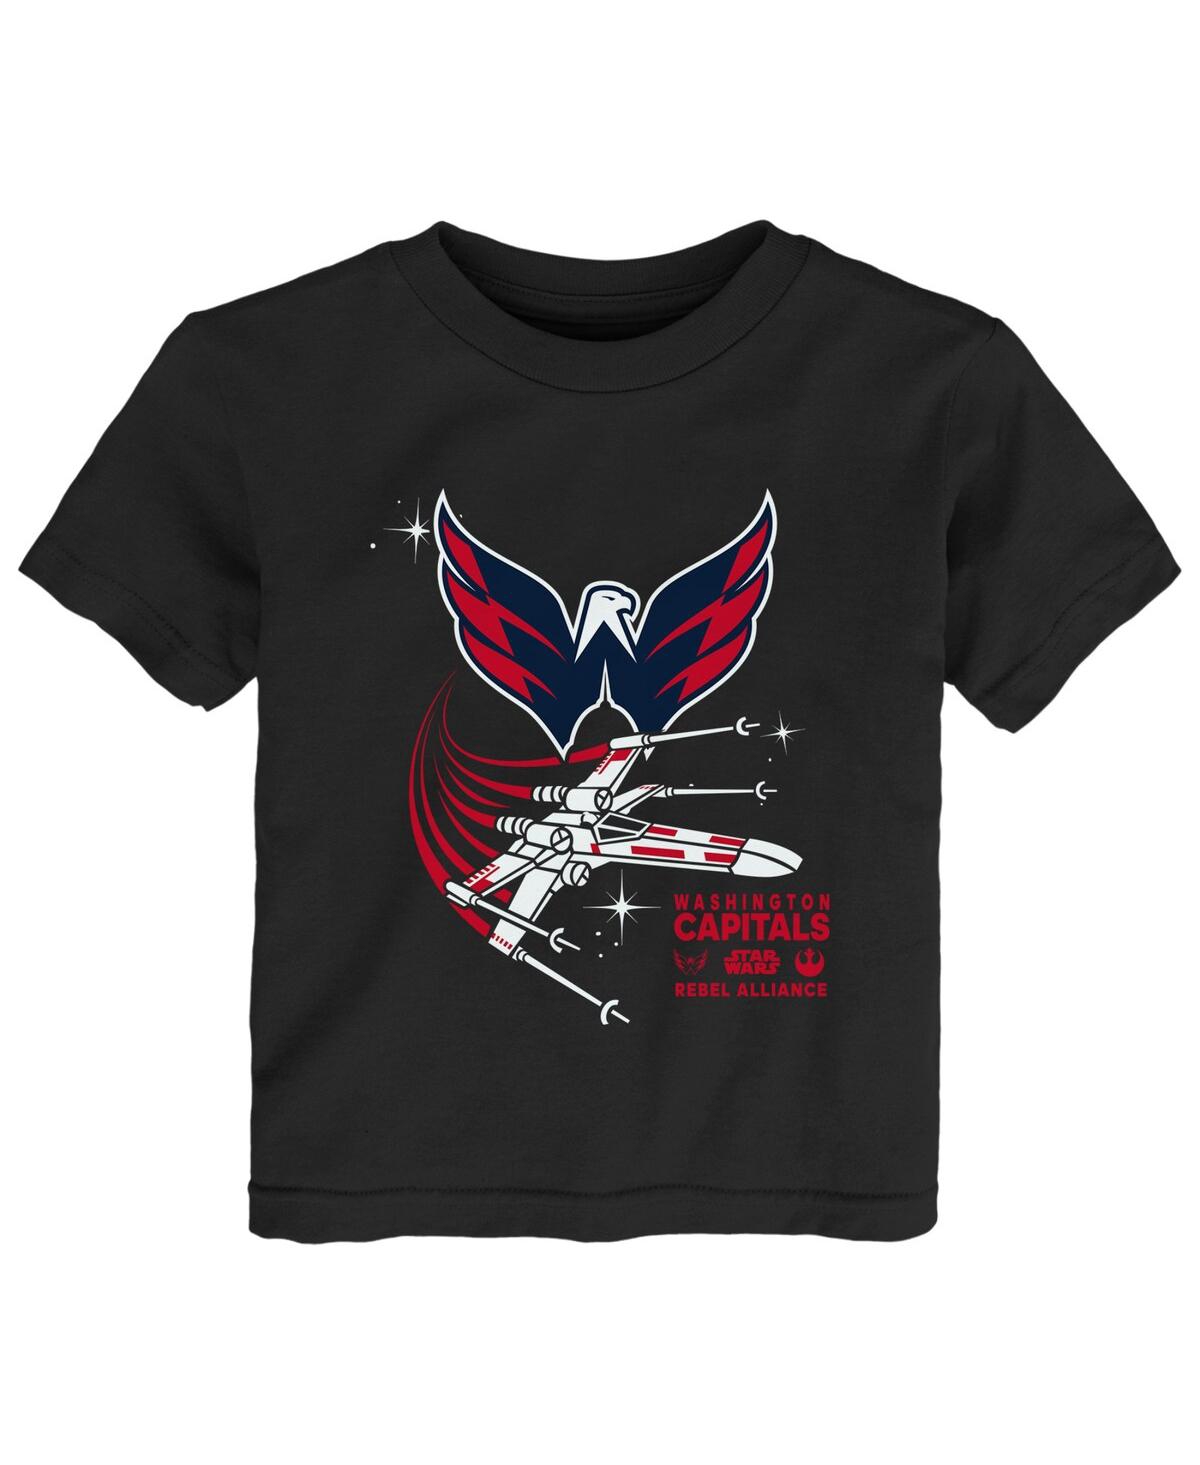 Outerstuff Babies' Toddler Boys And Girls Black Washington Capitals Star Wars Rebel Alliance T-shirt